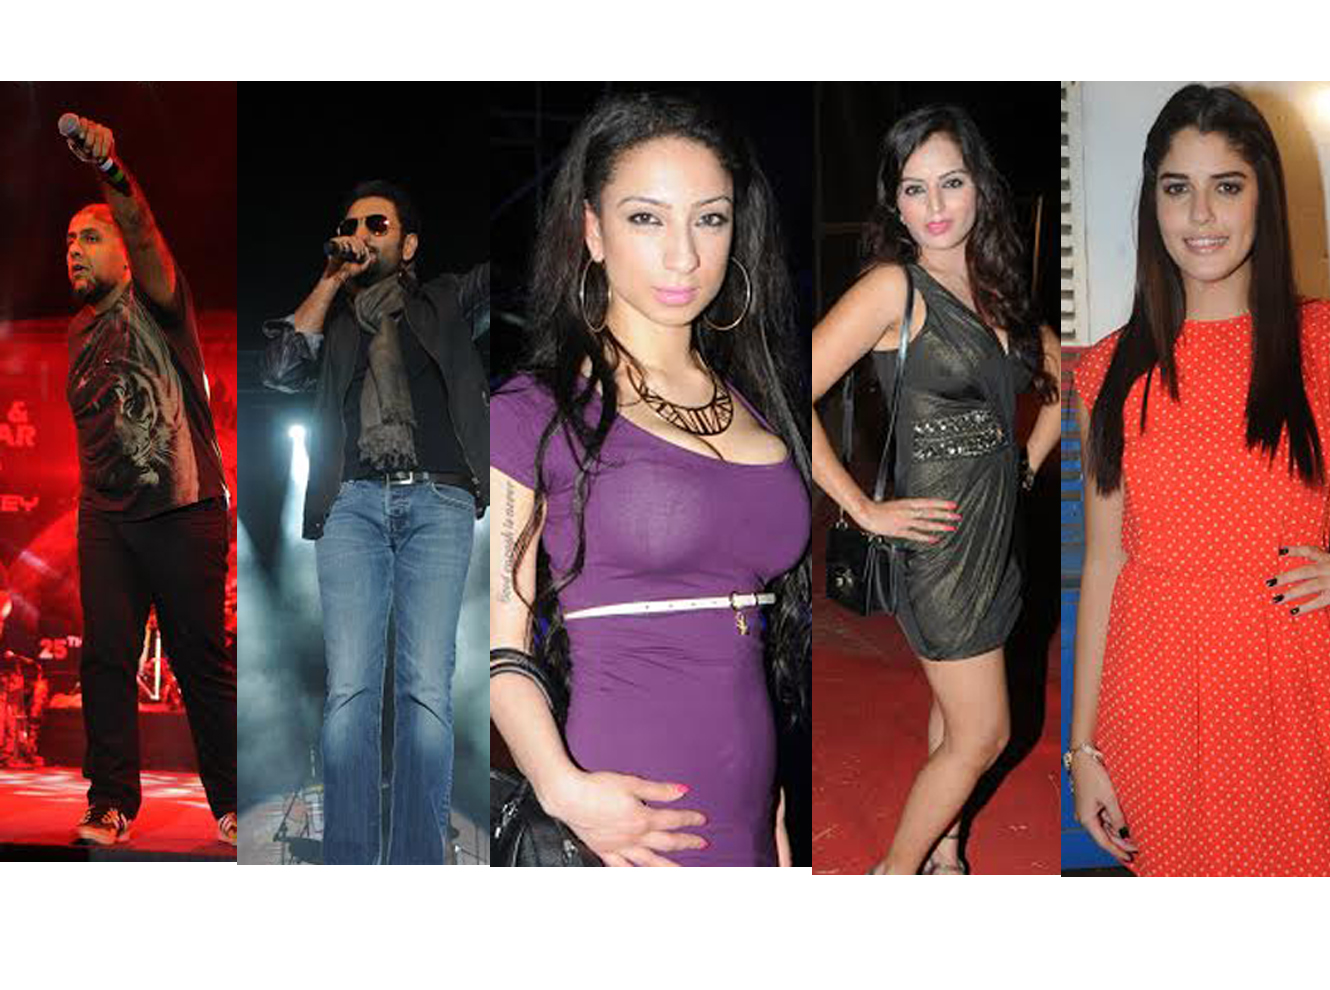 Vishal-Shekhar, Actress Meghna Patel, PlayBoy Girl Shanti Dynamite, Tanuj Virwani, Aditya Seal, Izabelle Leite, Rajiv Gandhi College